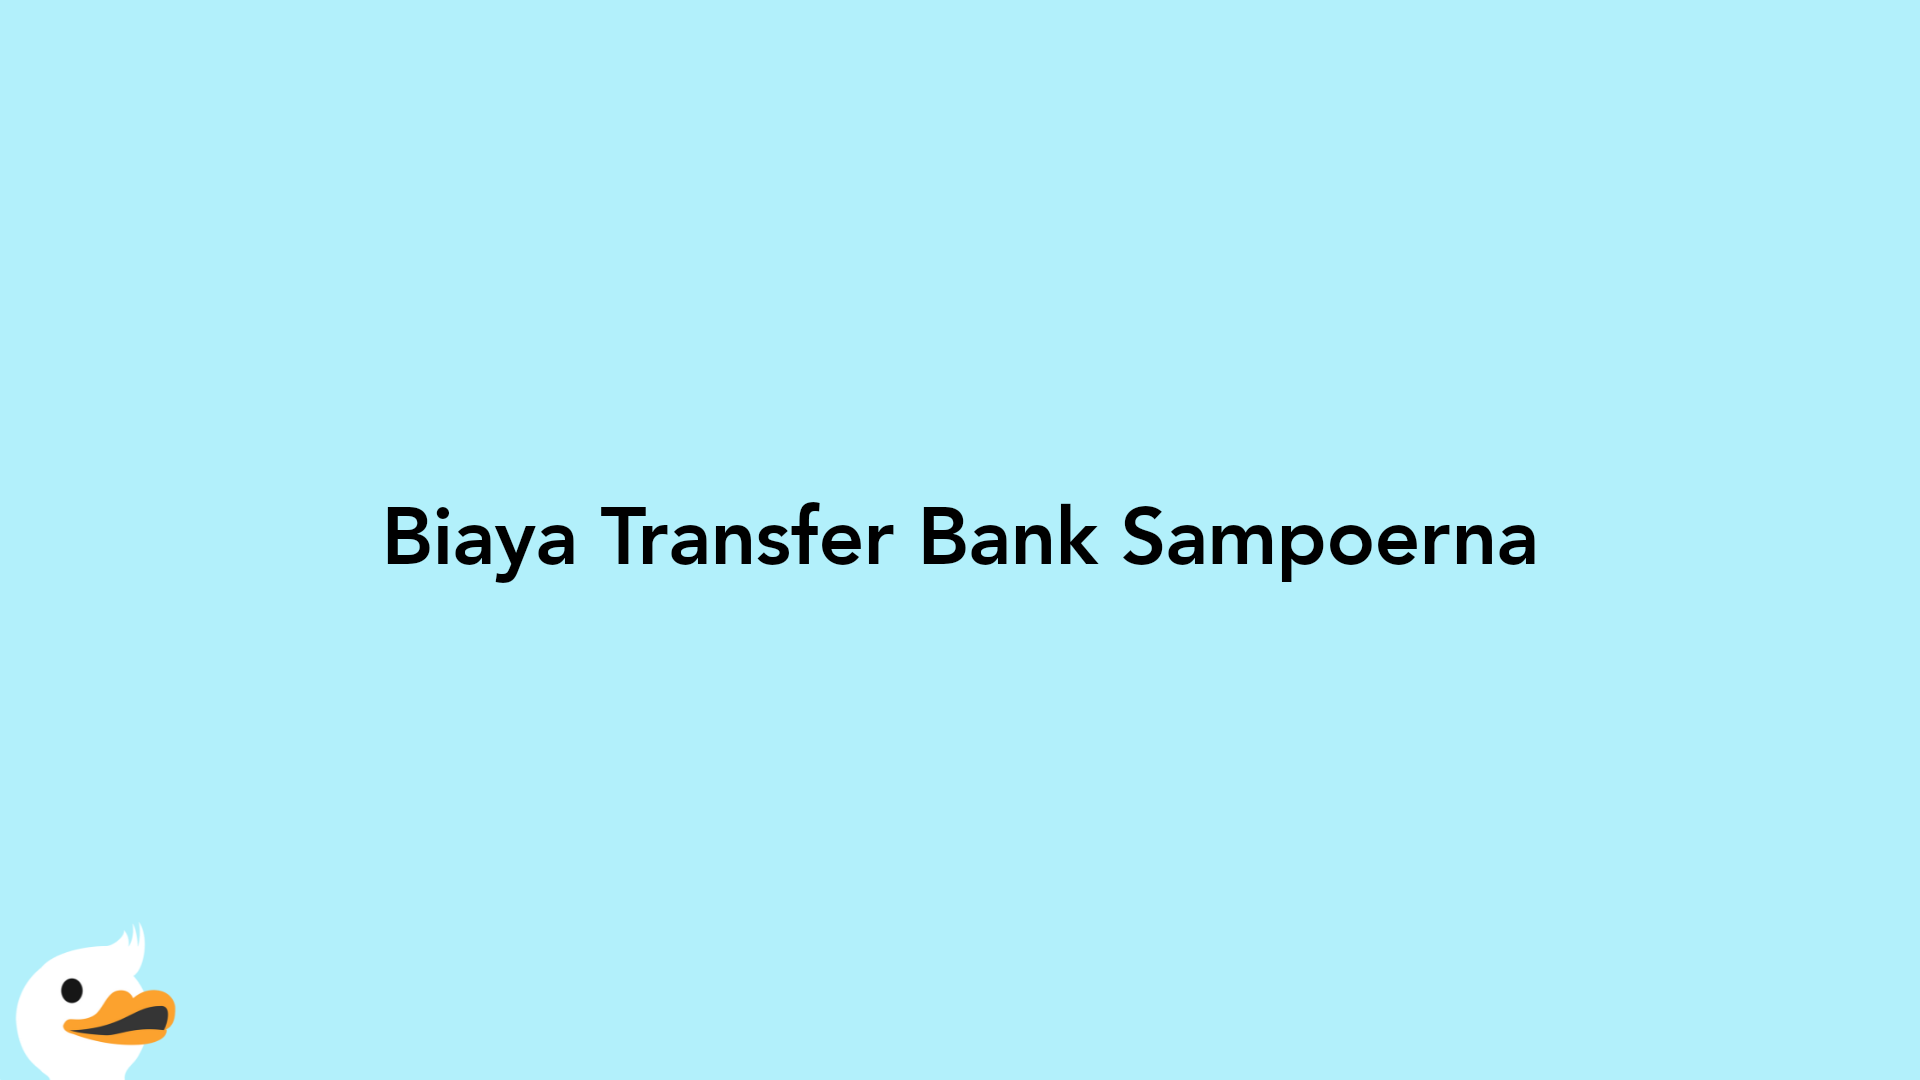 Biaya Transfer Bank Sampoerna